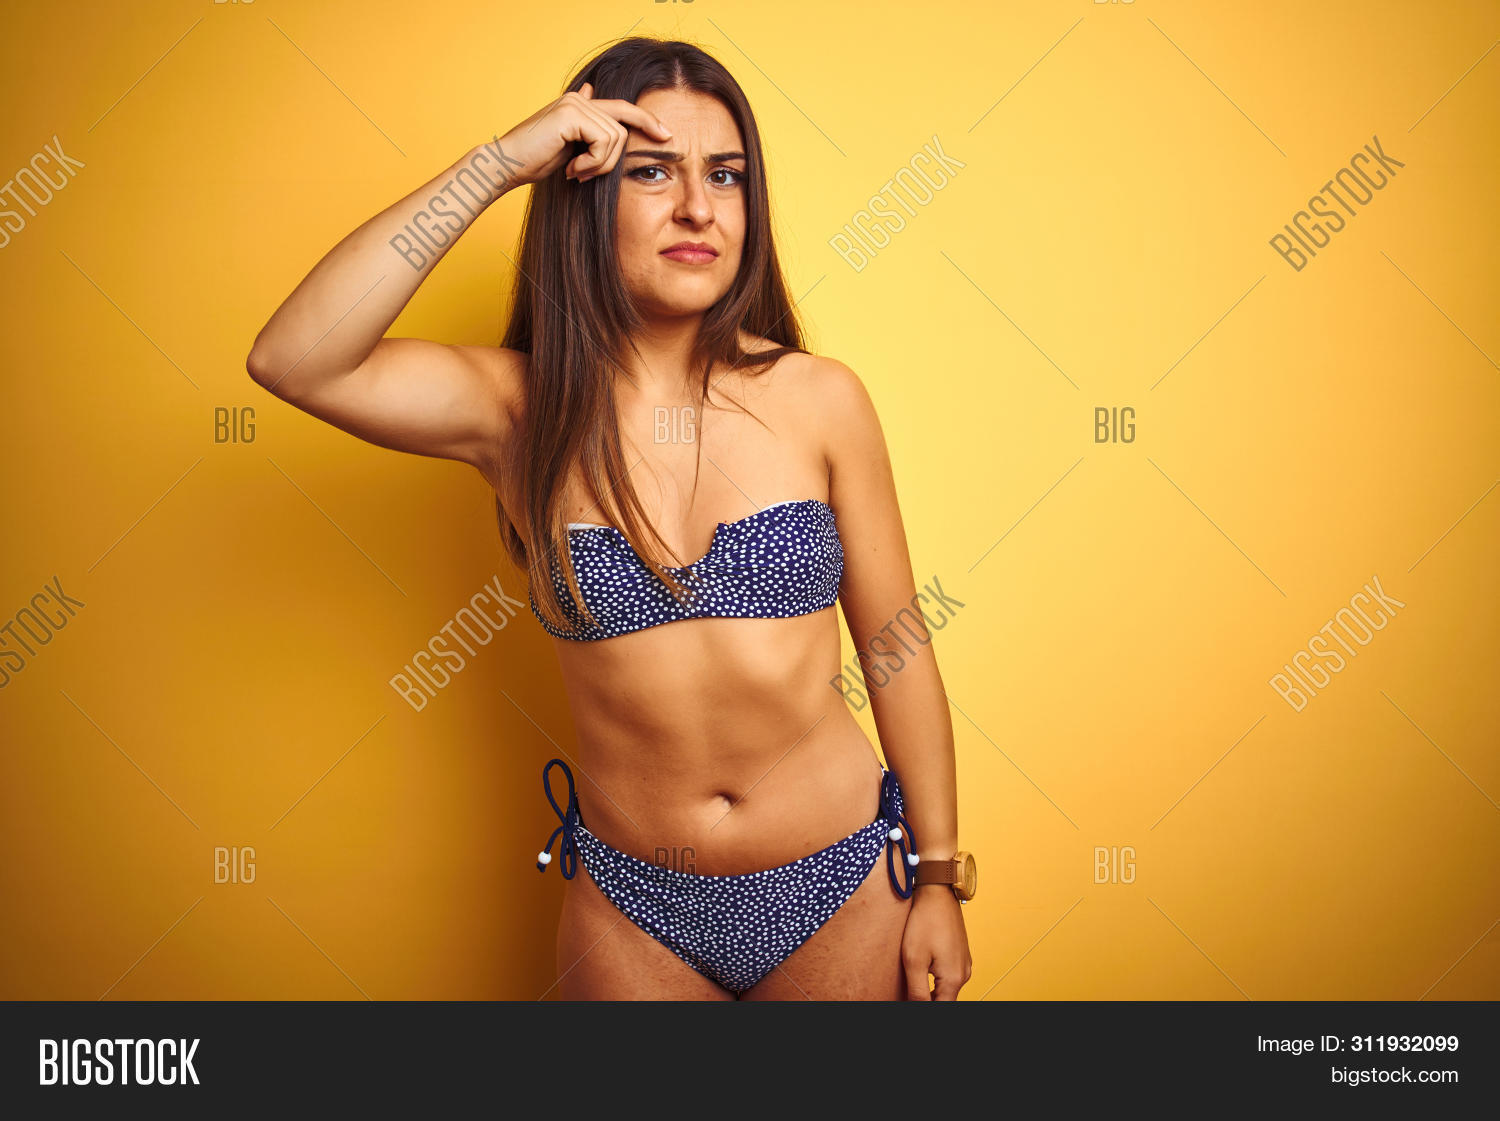 ayesha eman share ugly woman in bikini photos